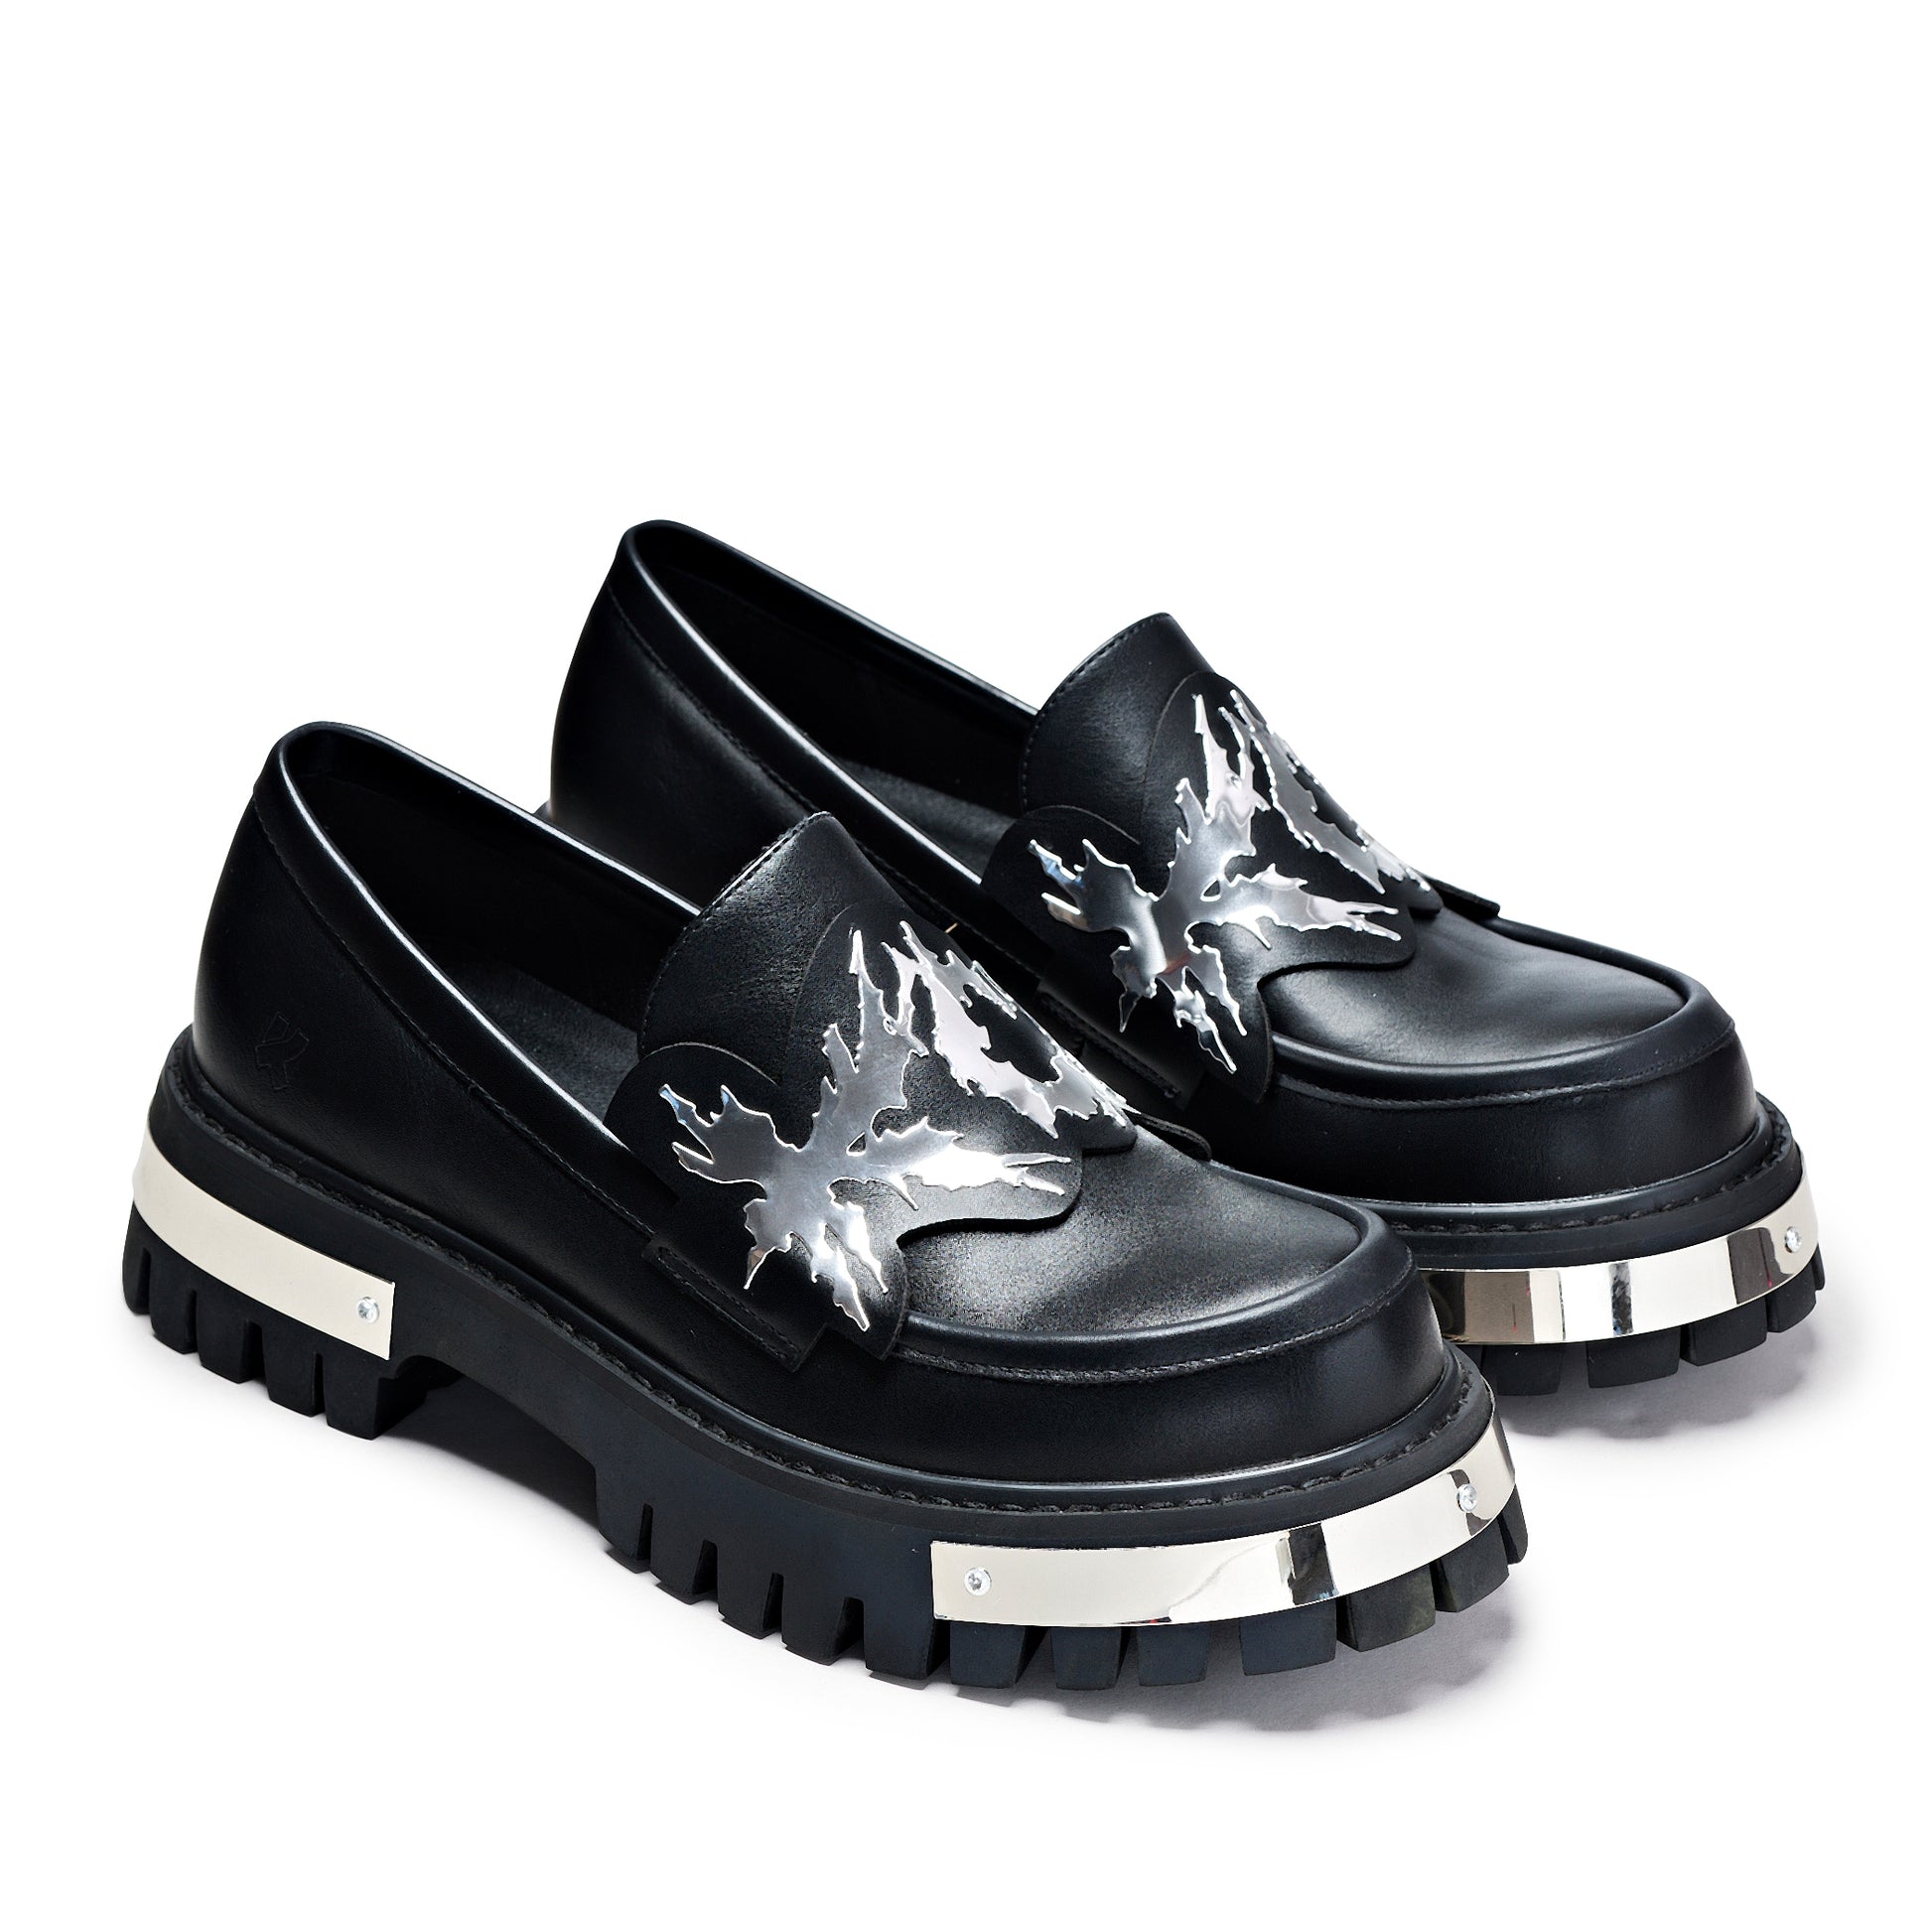 My Metal Loafers - Black - Shoes - KOI Footwear - Black - Three-Quarter View